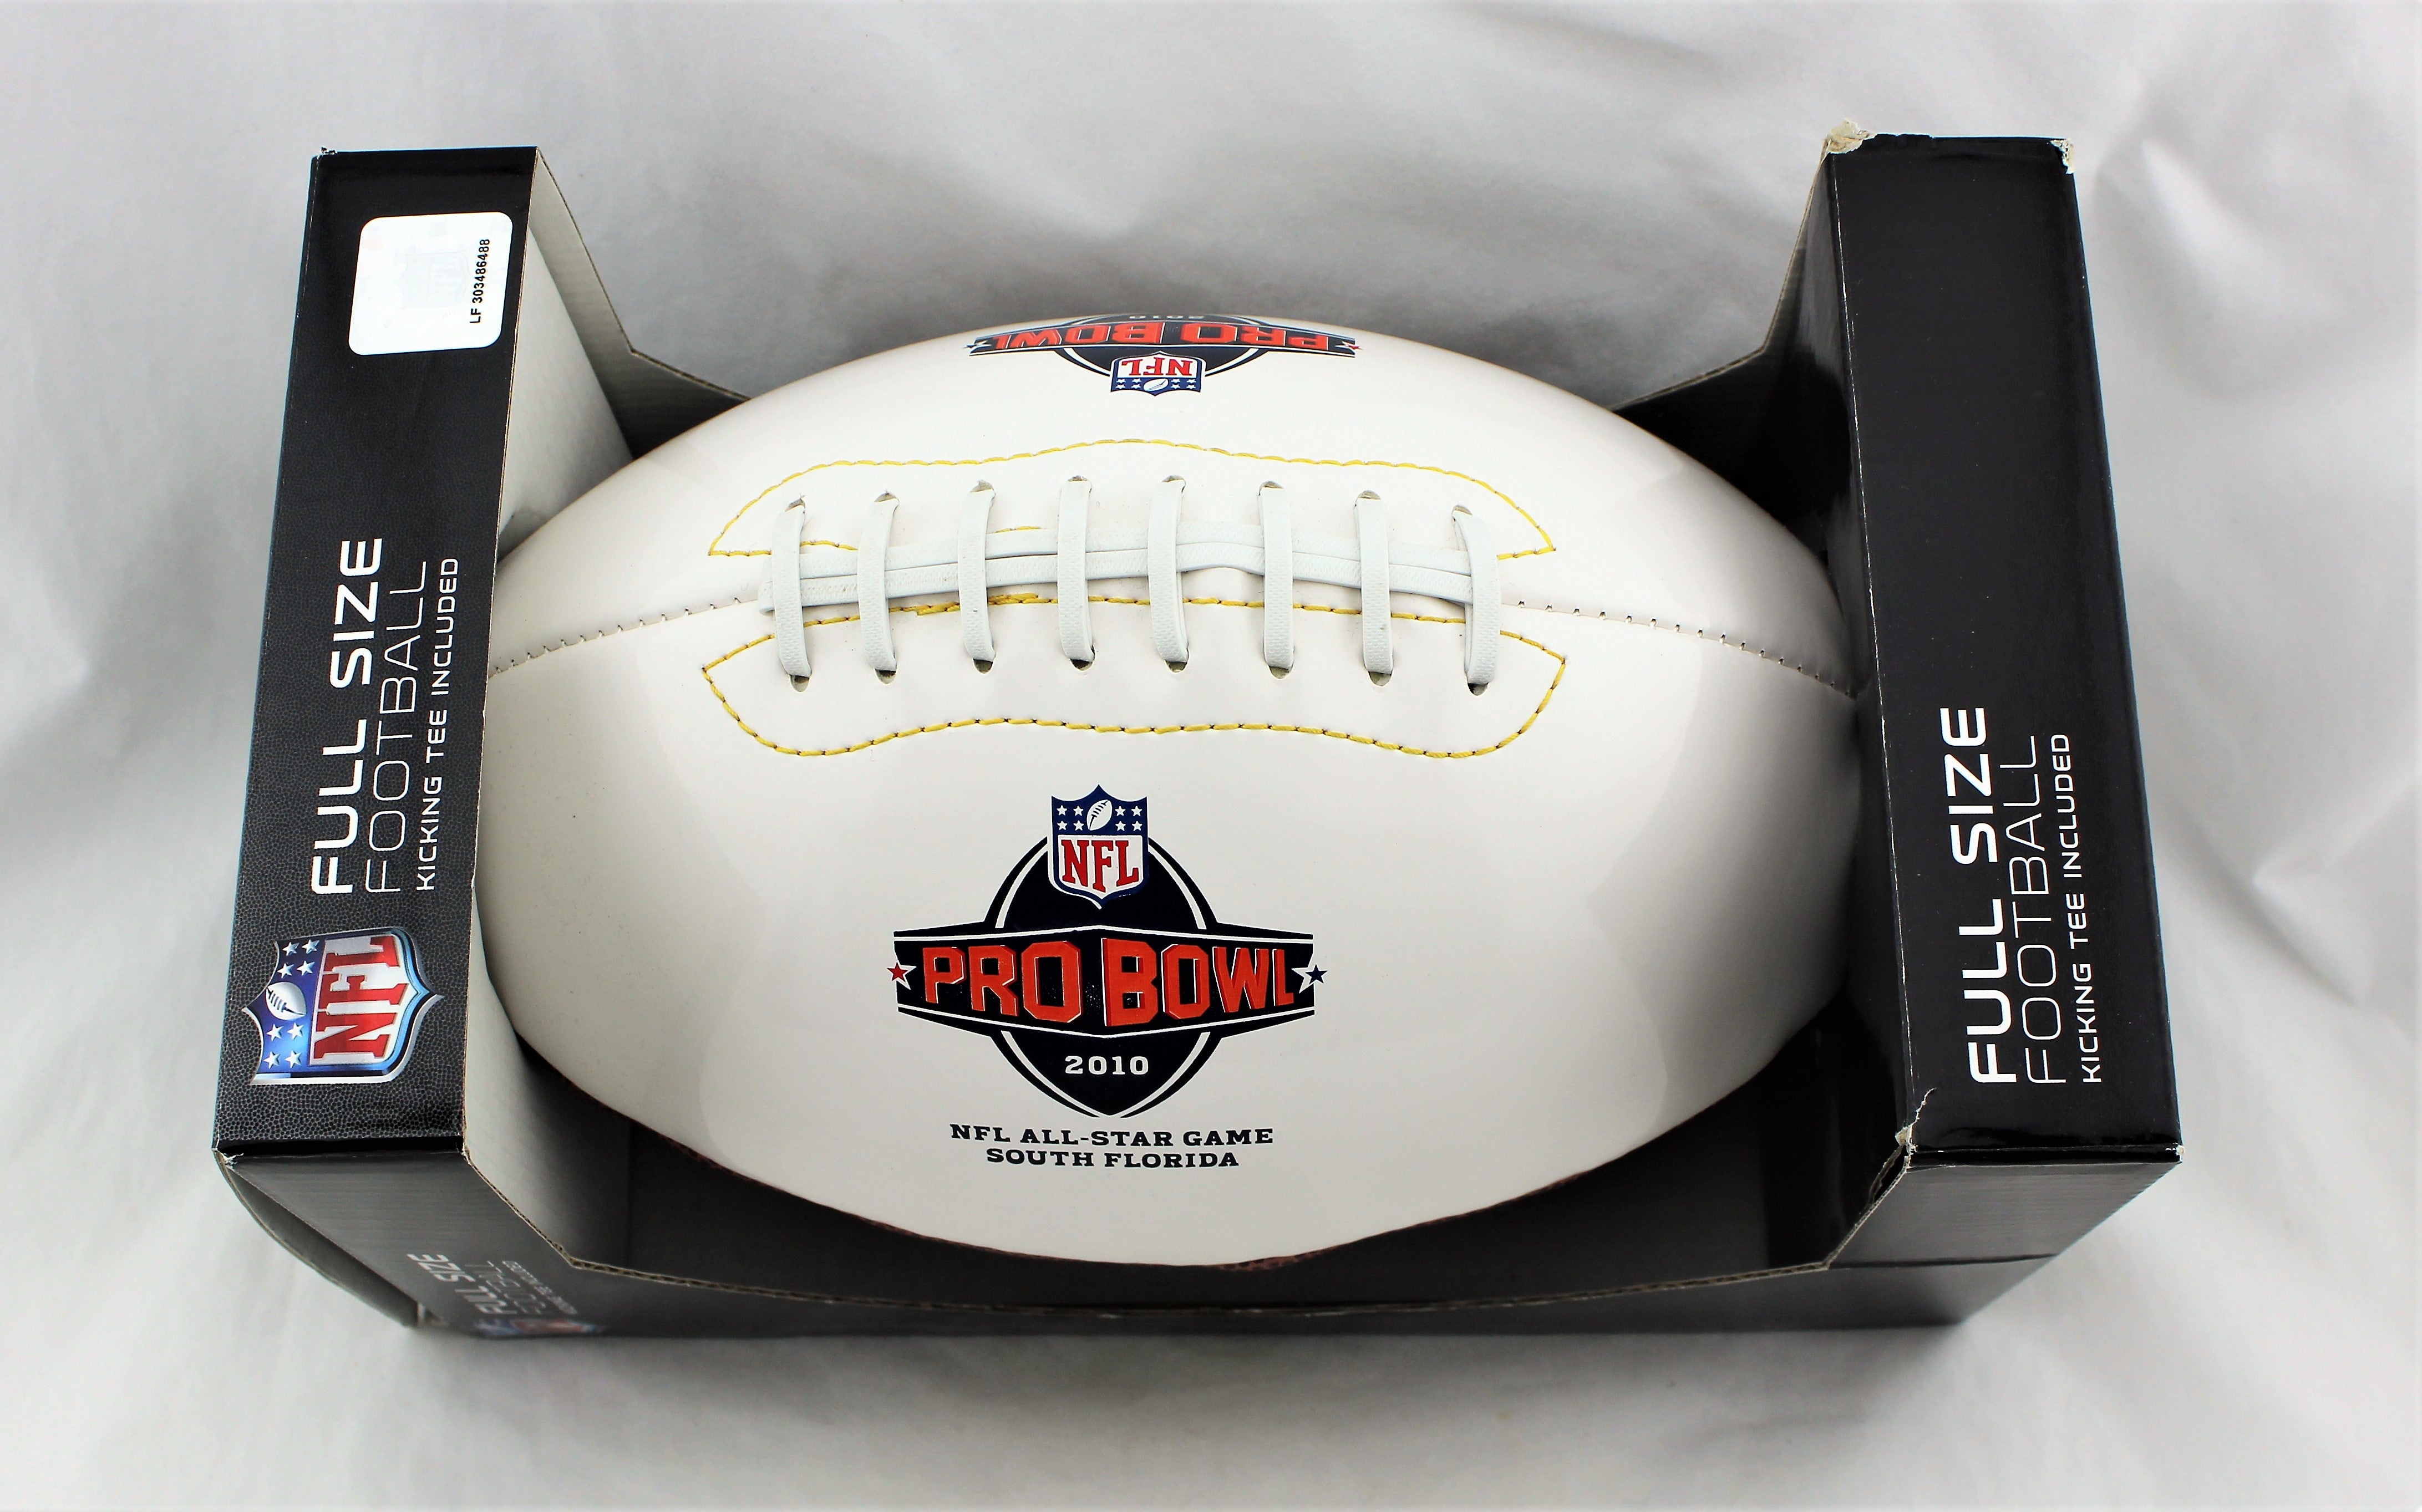 Denver Broncos Pro Bowl 2010 Memorabilia